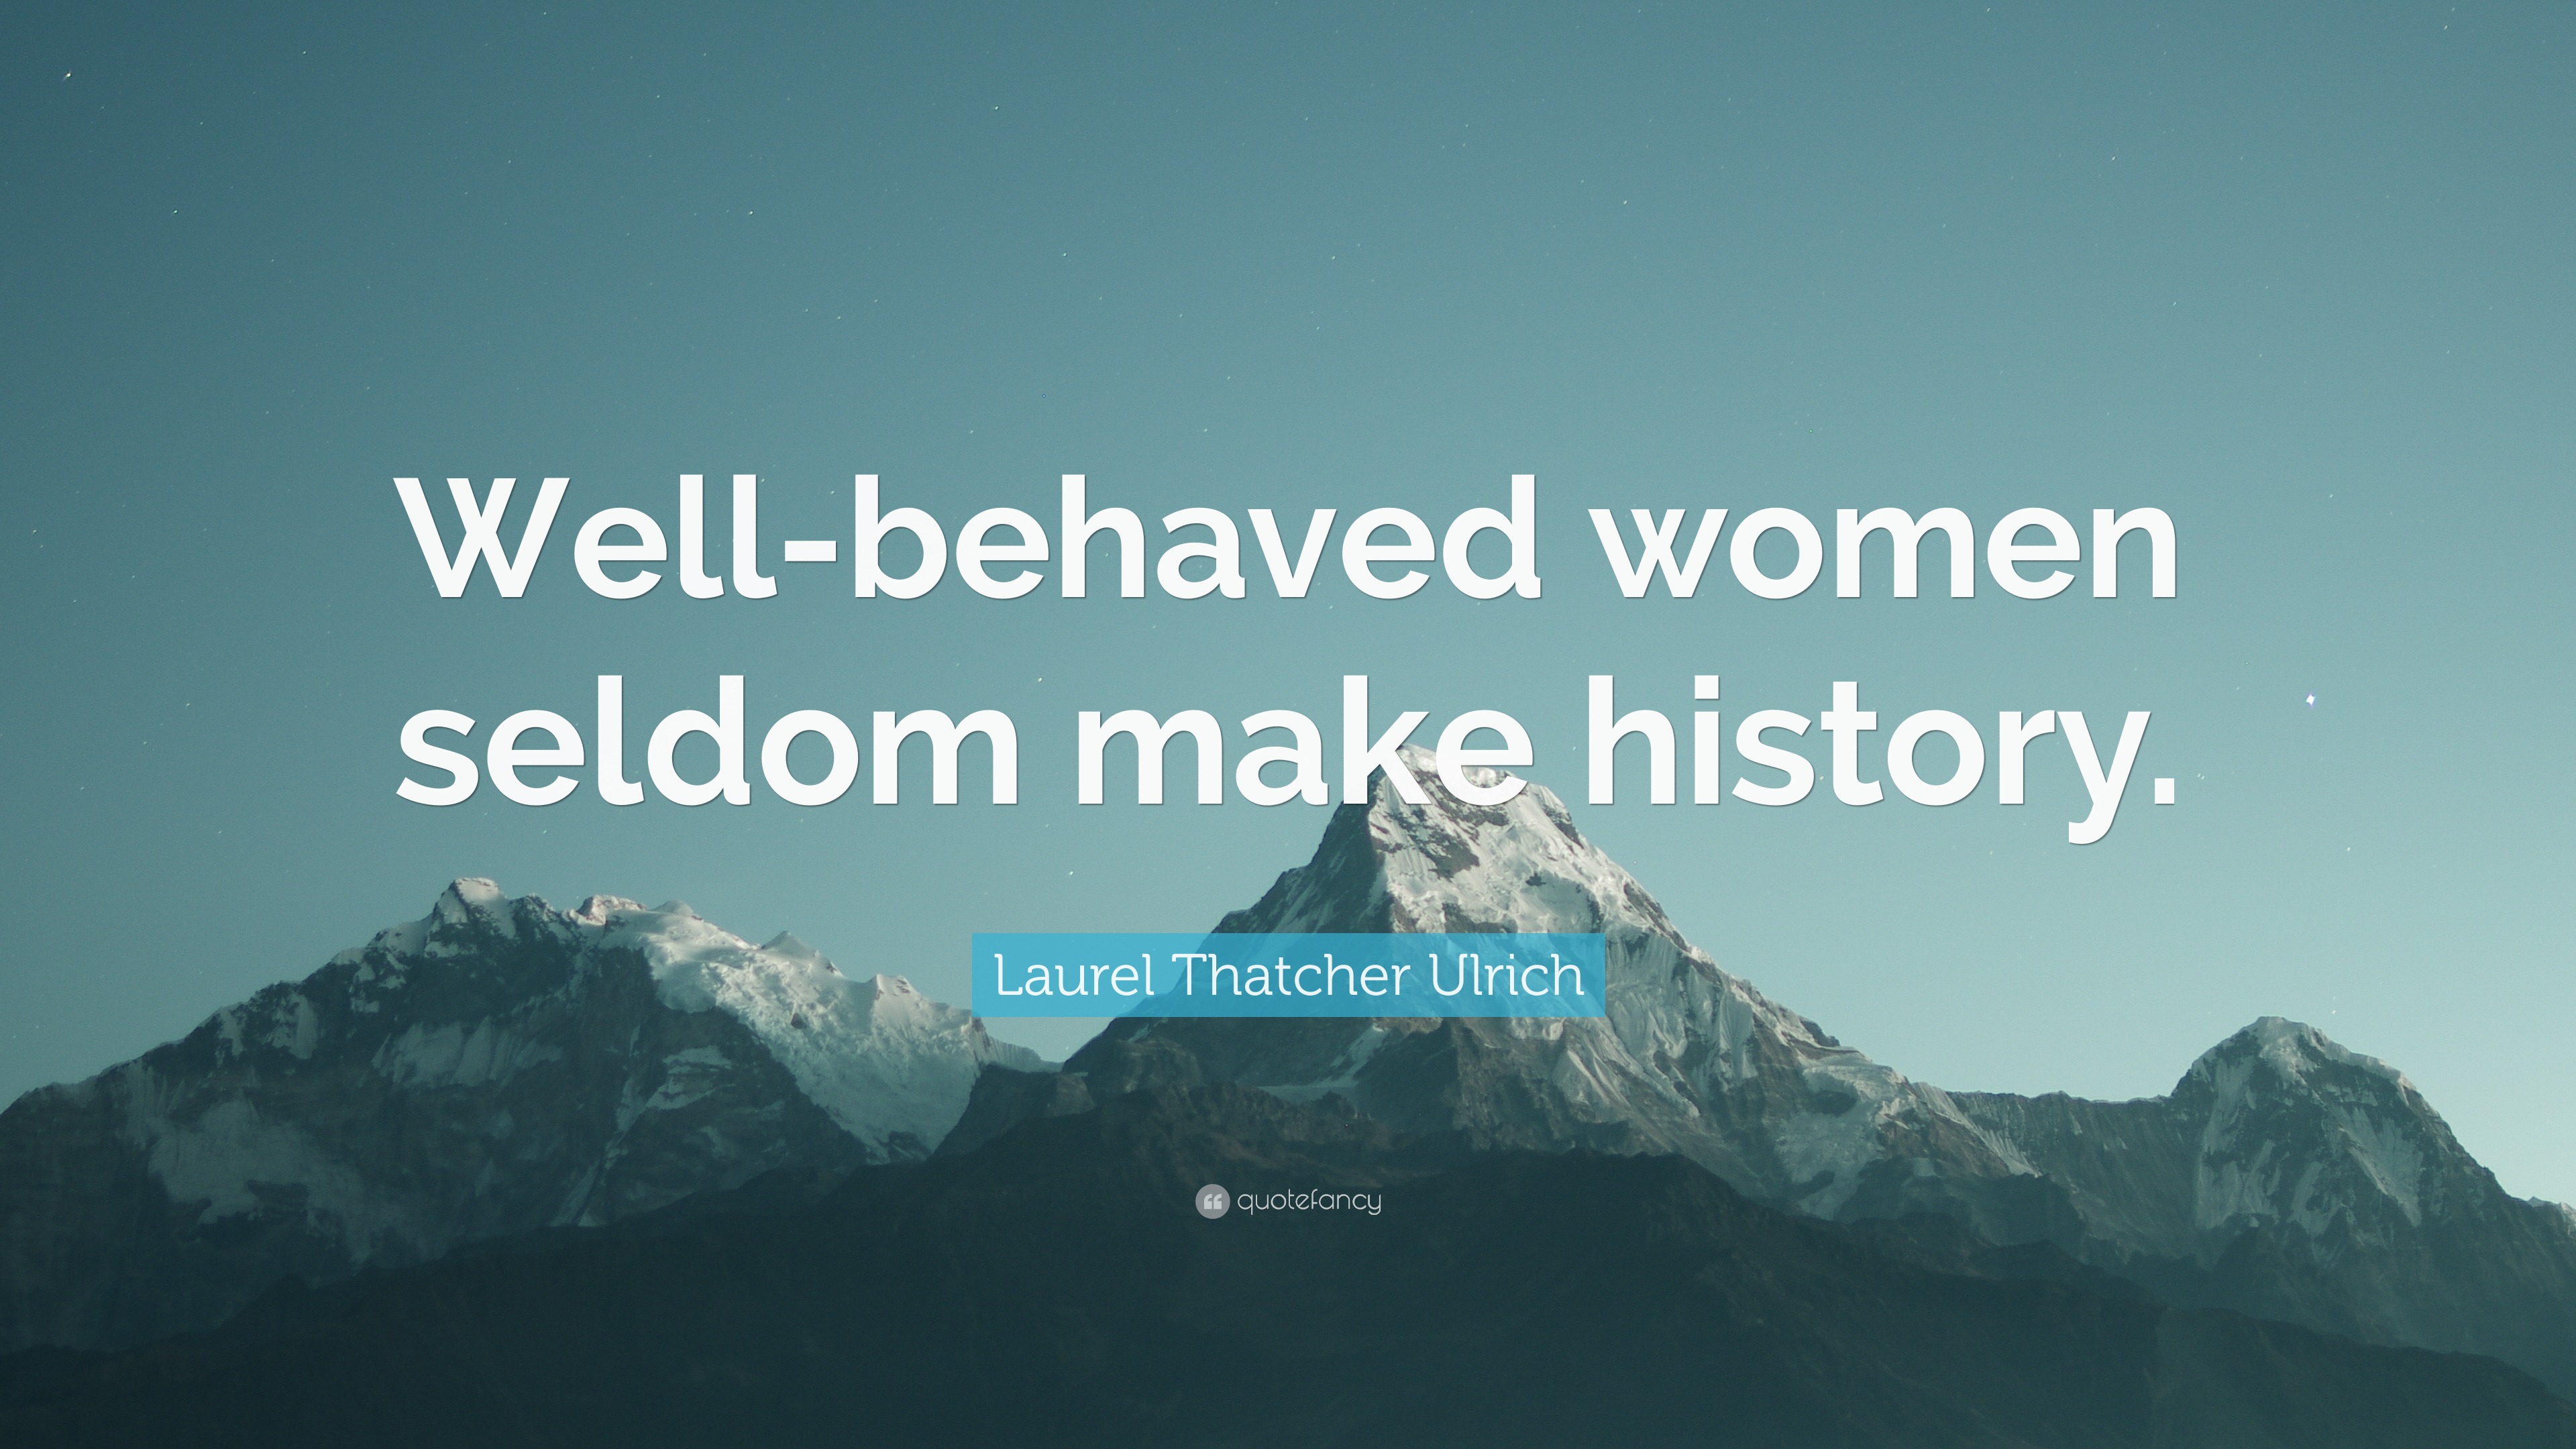 Laurel Thatcher Ulrich Quote “well Behaved Women Seldom Make History” 3496